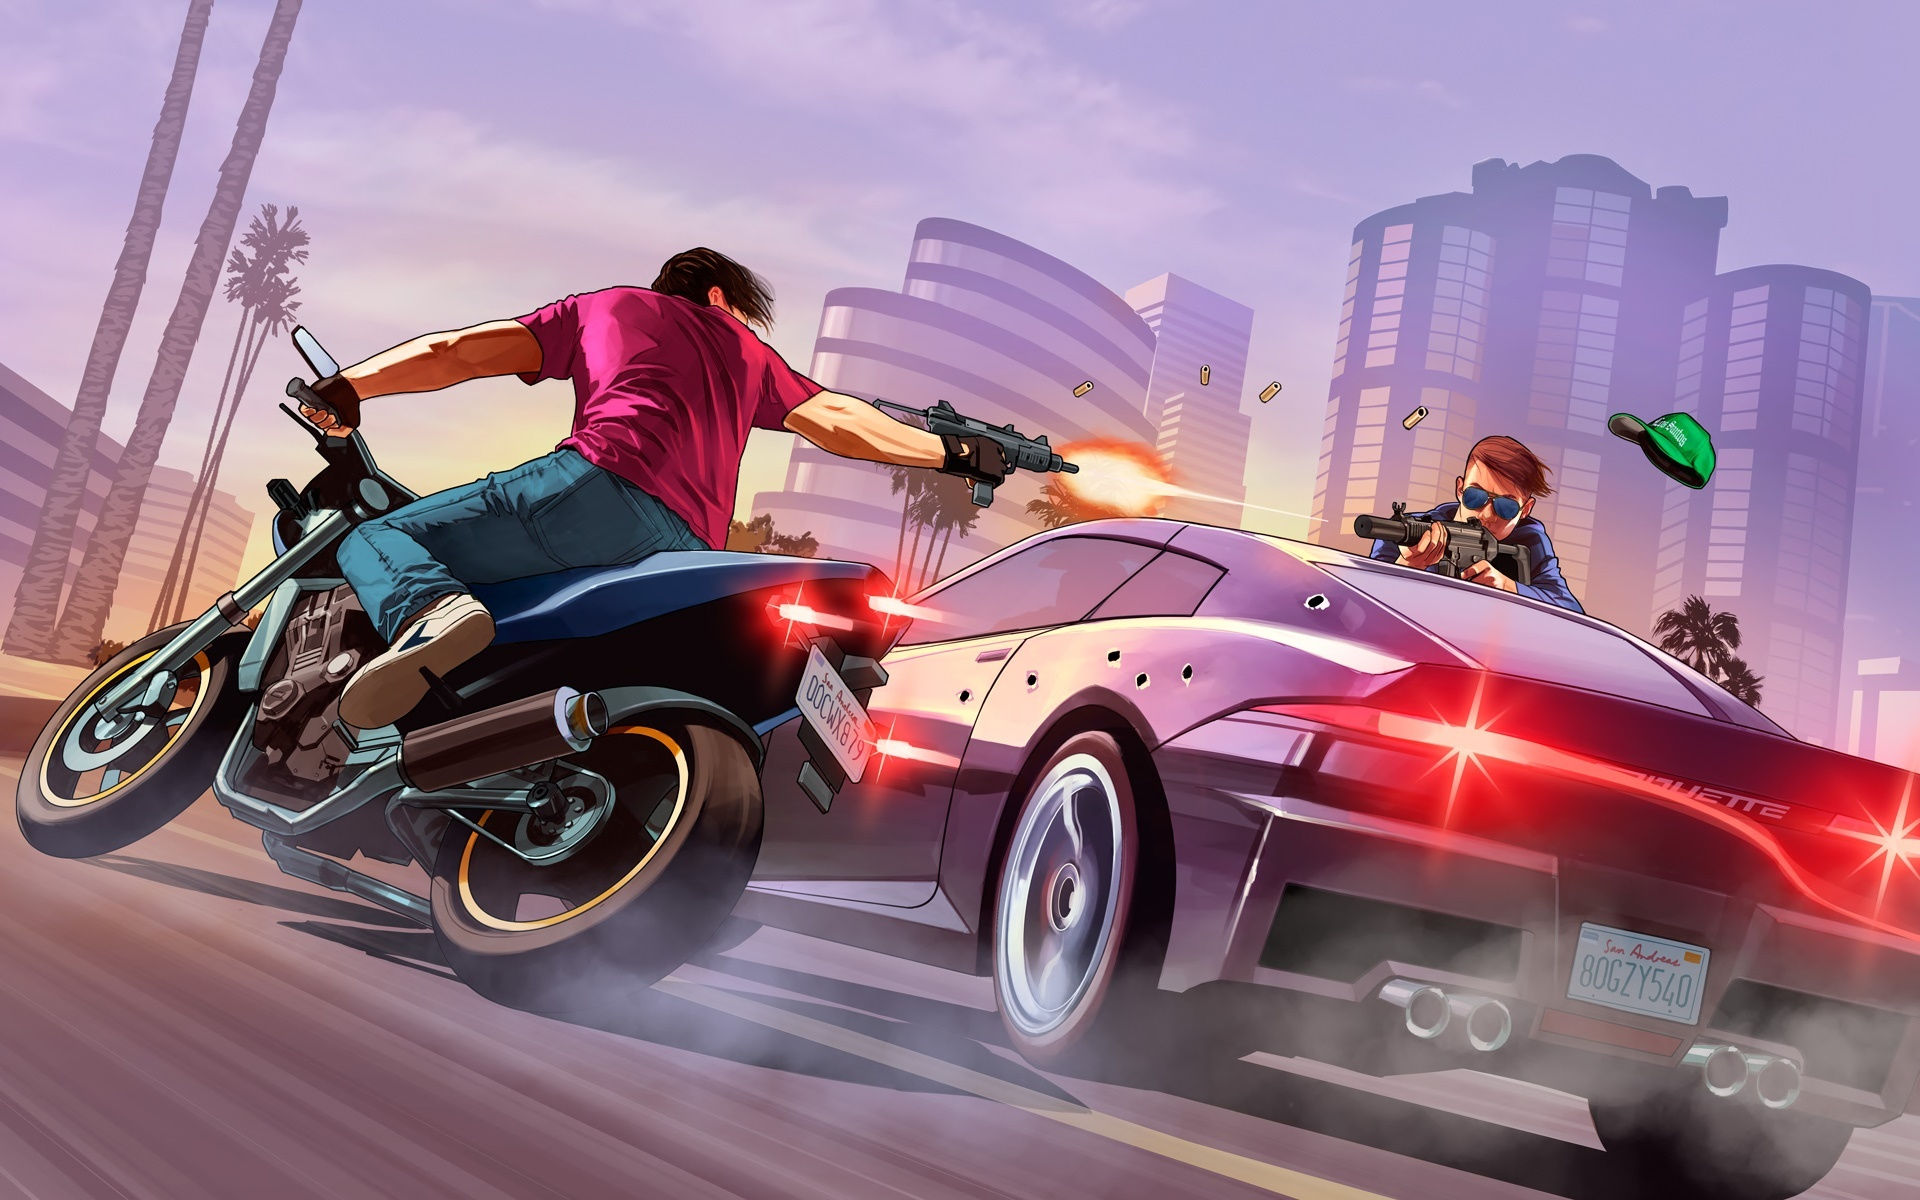 Alleged Grand Theft Auto 6 gameplay leaks online 